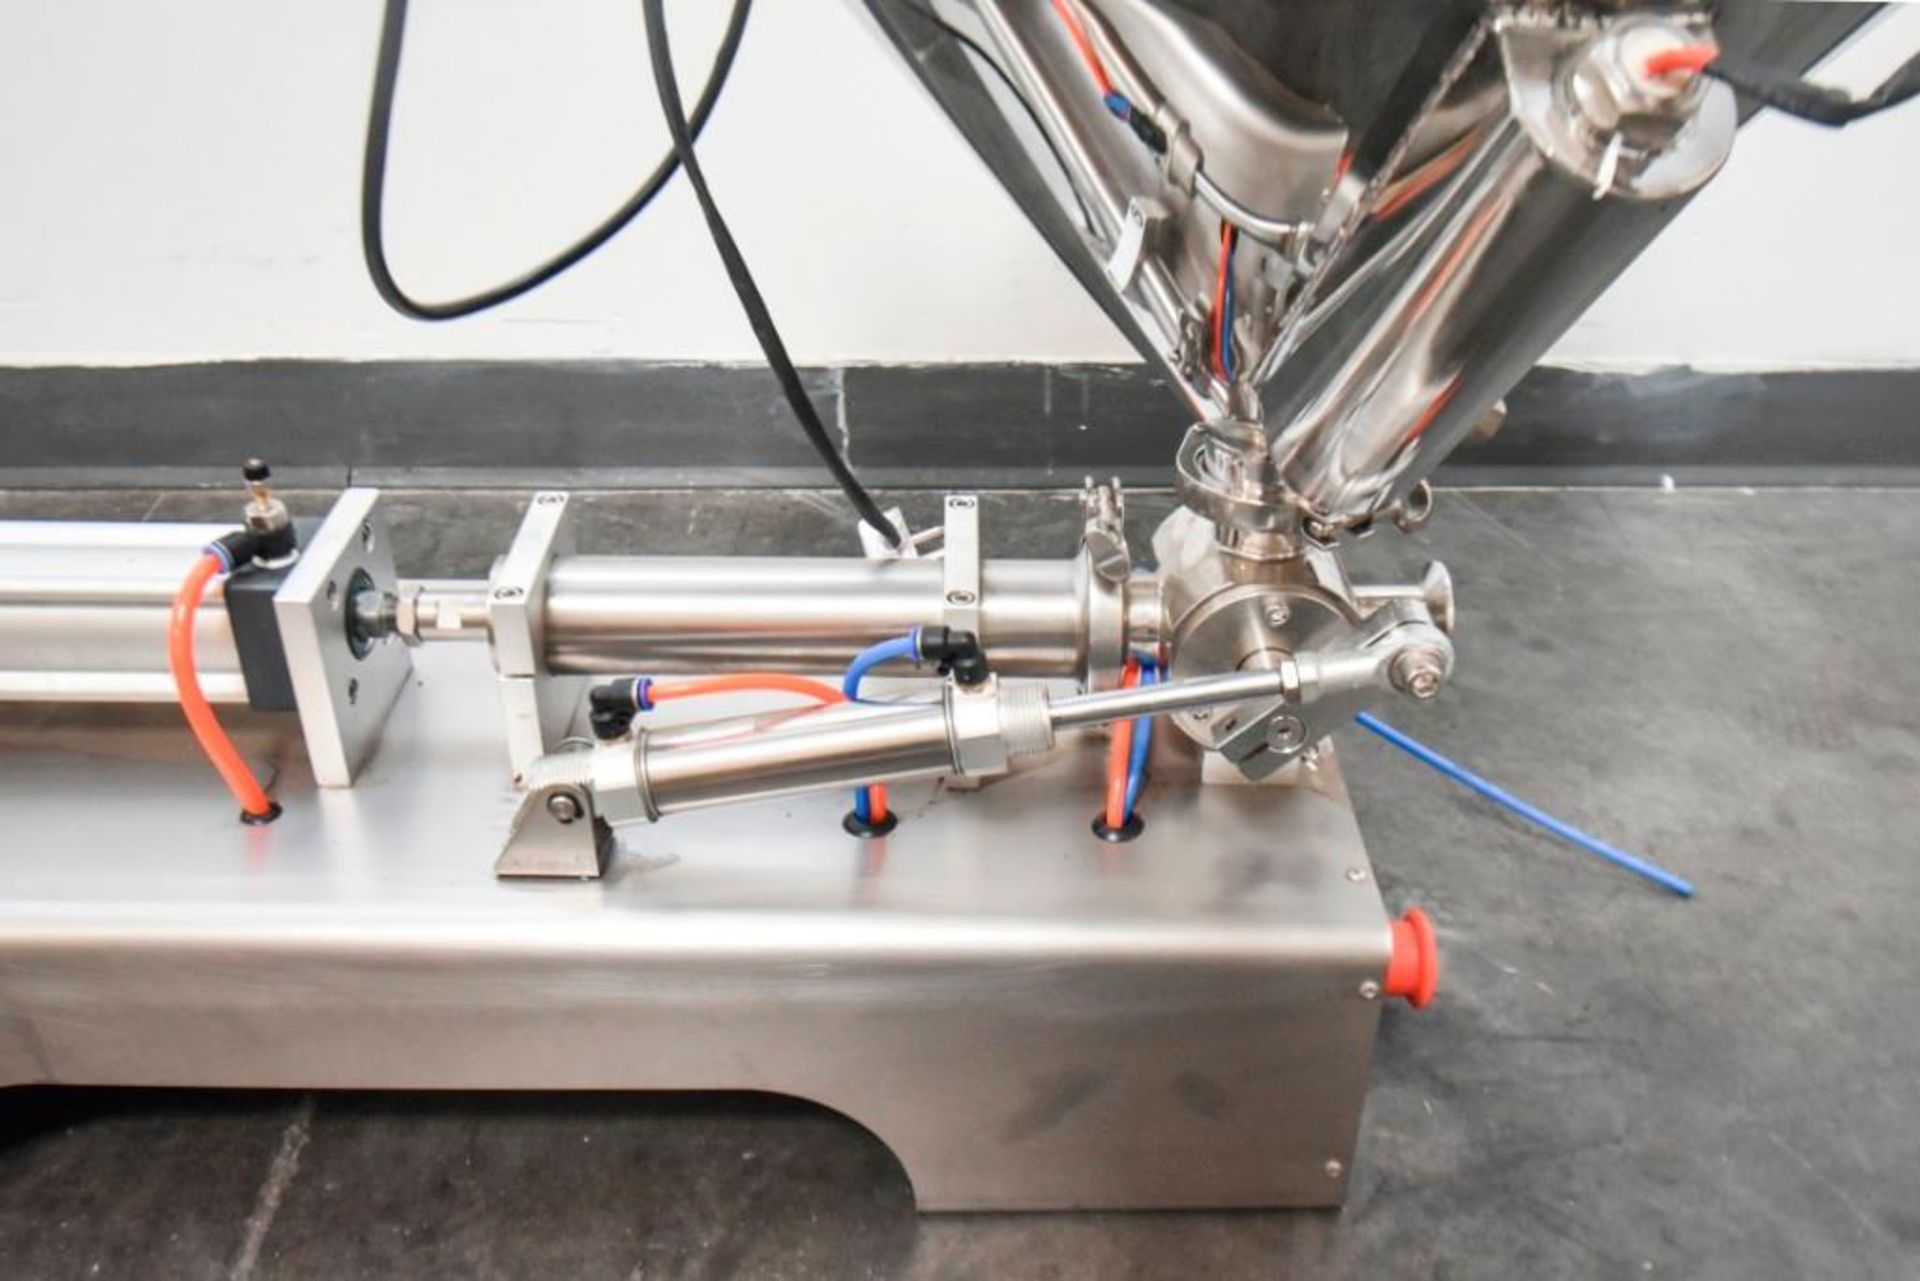 Quantitative Semi-Automatic Paste Liquid Filling Machine G1WG with Heated Hopper & Mixing Motor - Image 9 of 15